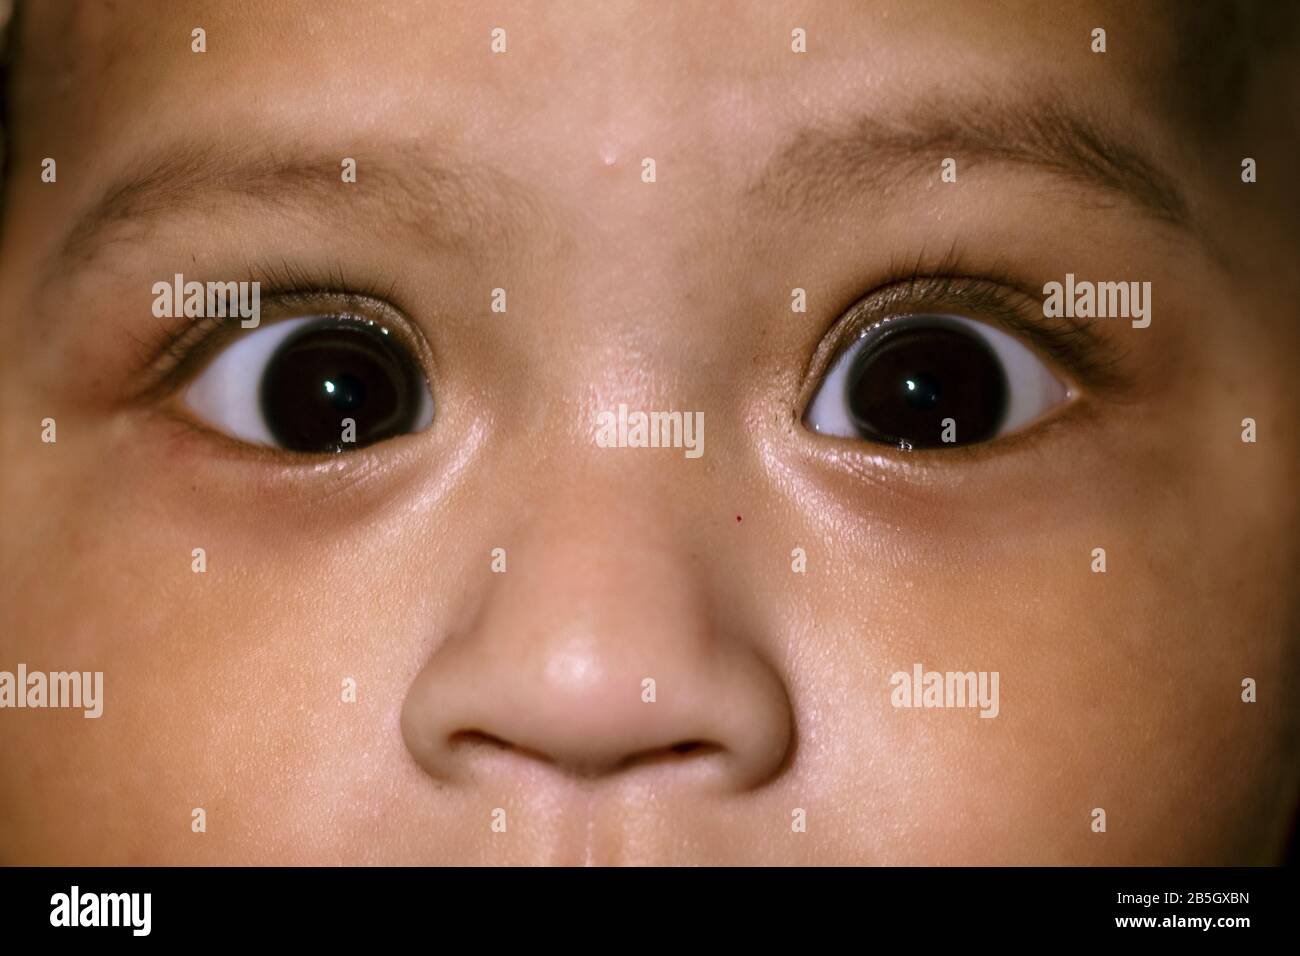 Newborn indian baby eyes and nose, close-up looking at camera Stock Photo